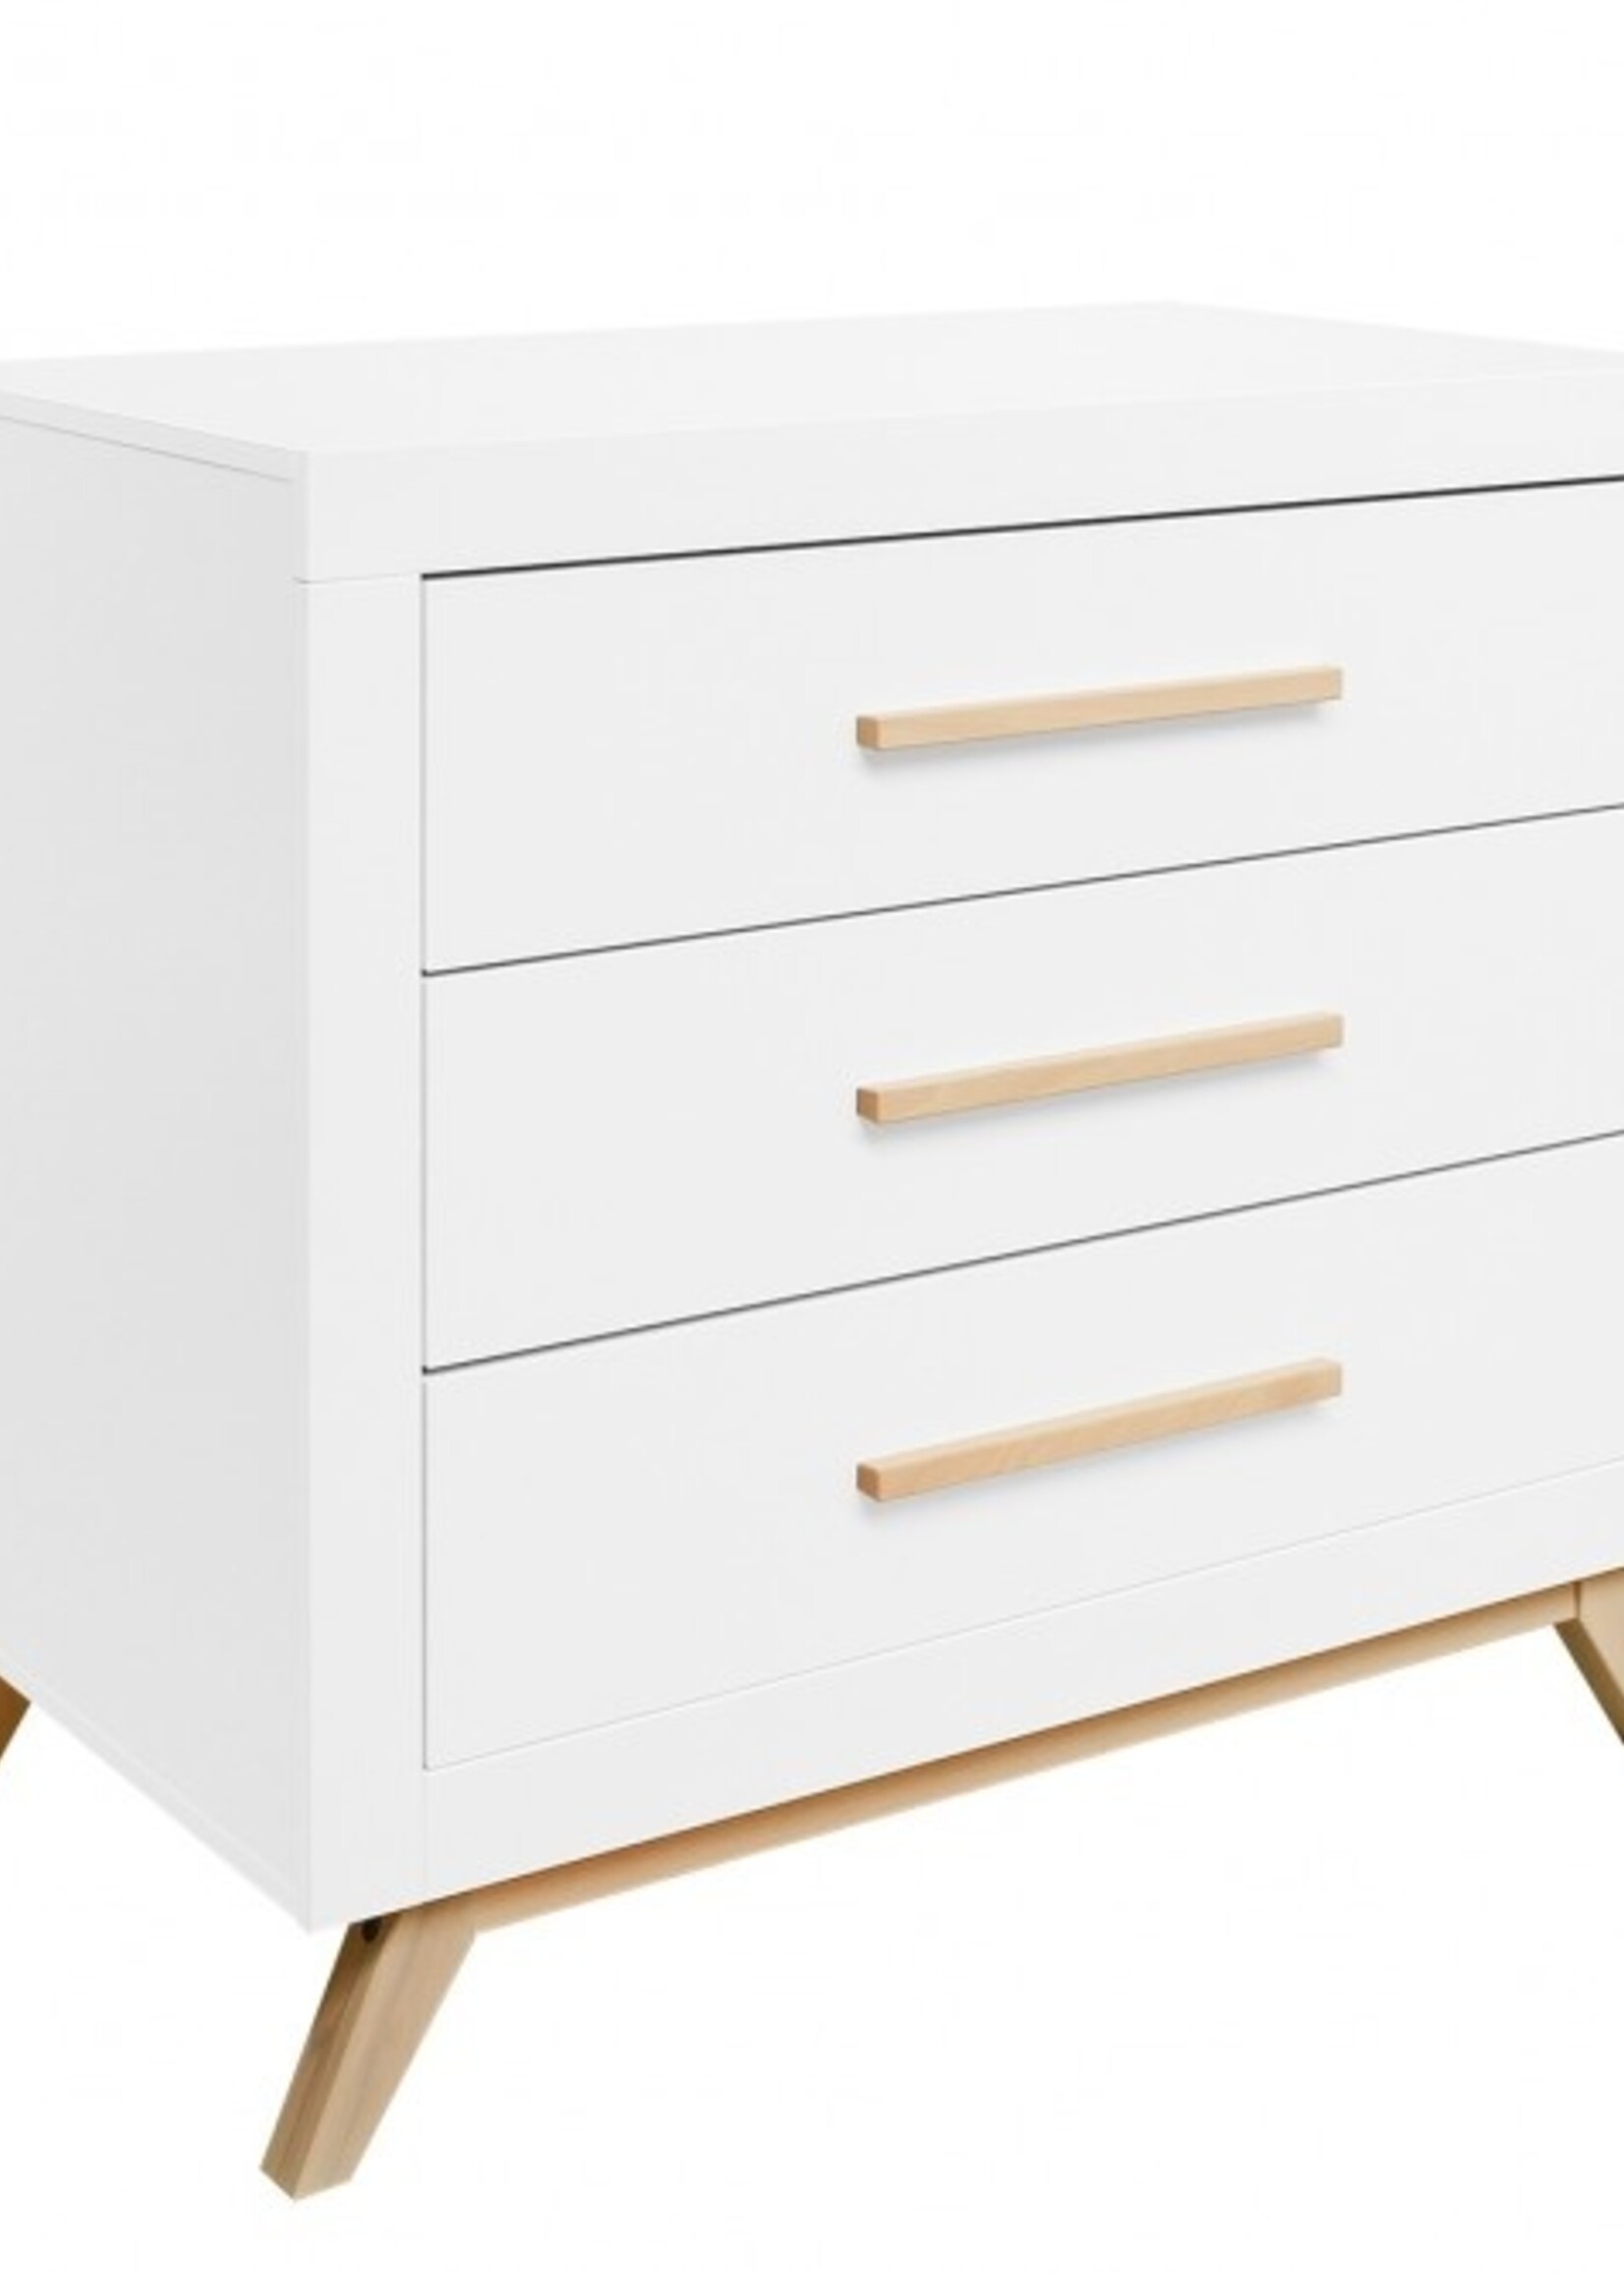 BOPITA Bed 60x120cm + Chest of drawers Fenna white / natural